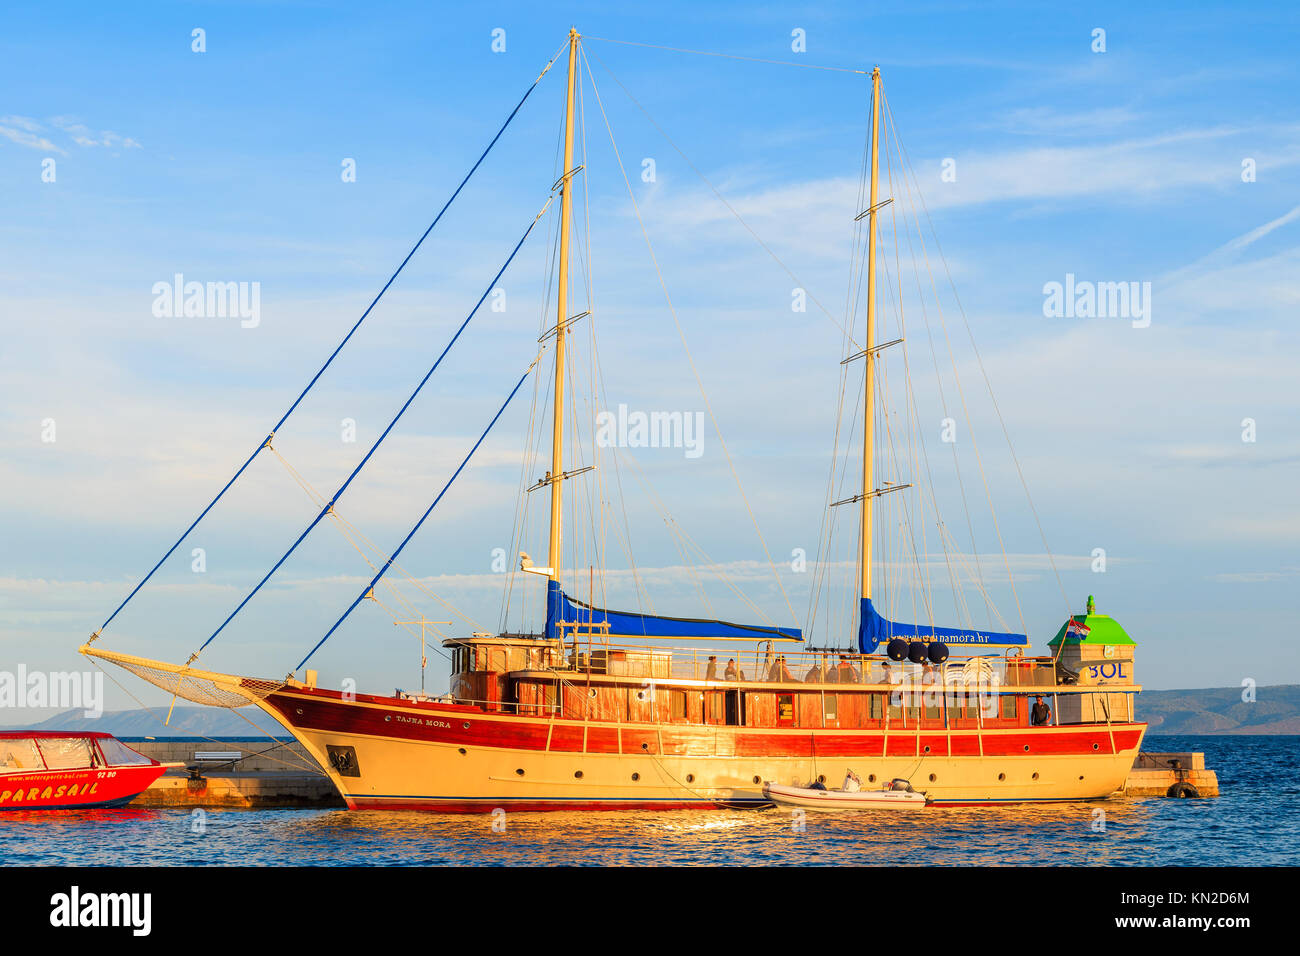 Stadt Bol, Kroatien - Sep 7, 2017: Traditionelle Holz- yacht Boot in Bol Hafen bei Sonnenuntergang zeit Verankerung, Insel Brac, Kroatien. Stockfoto